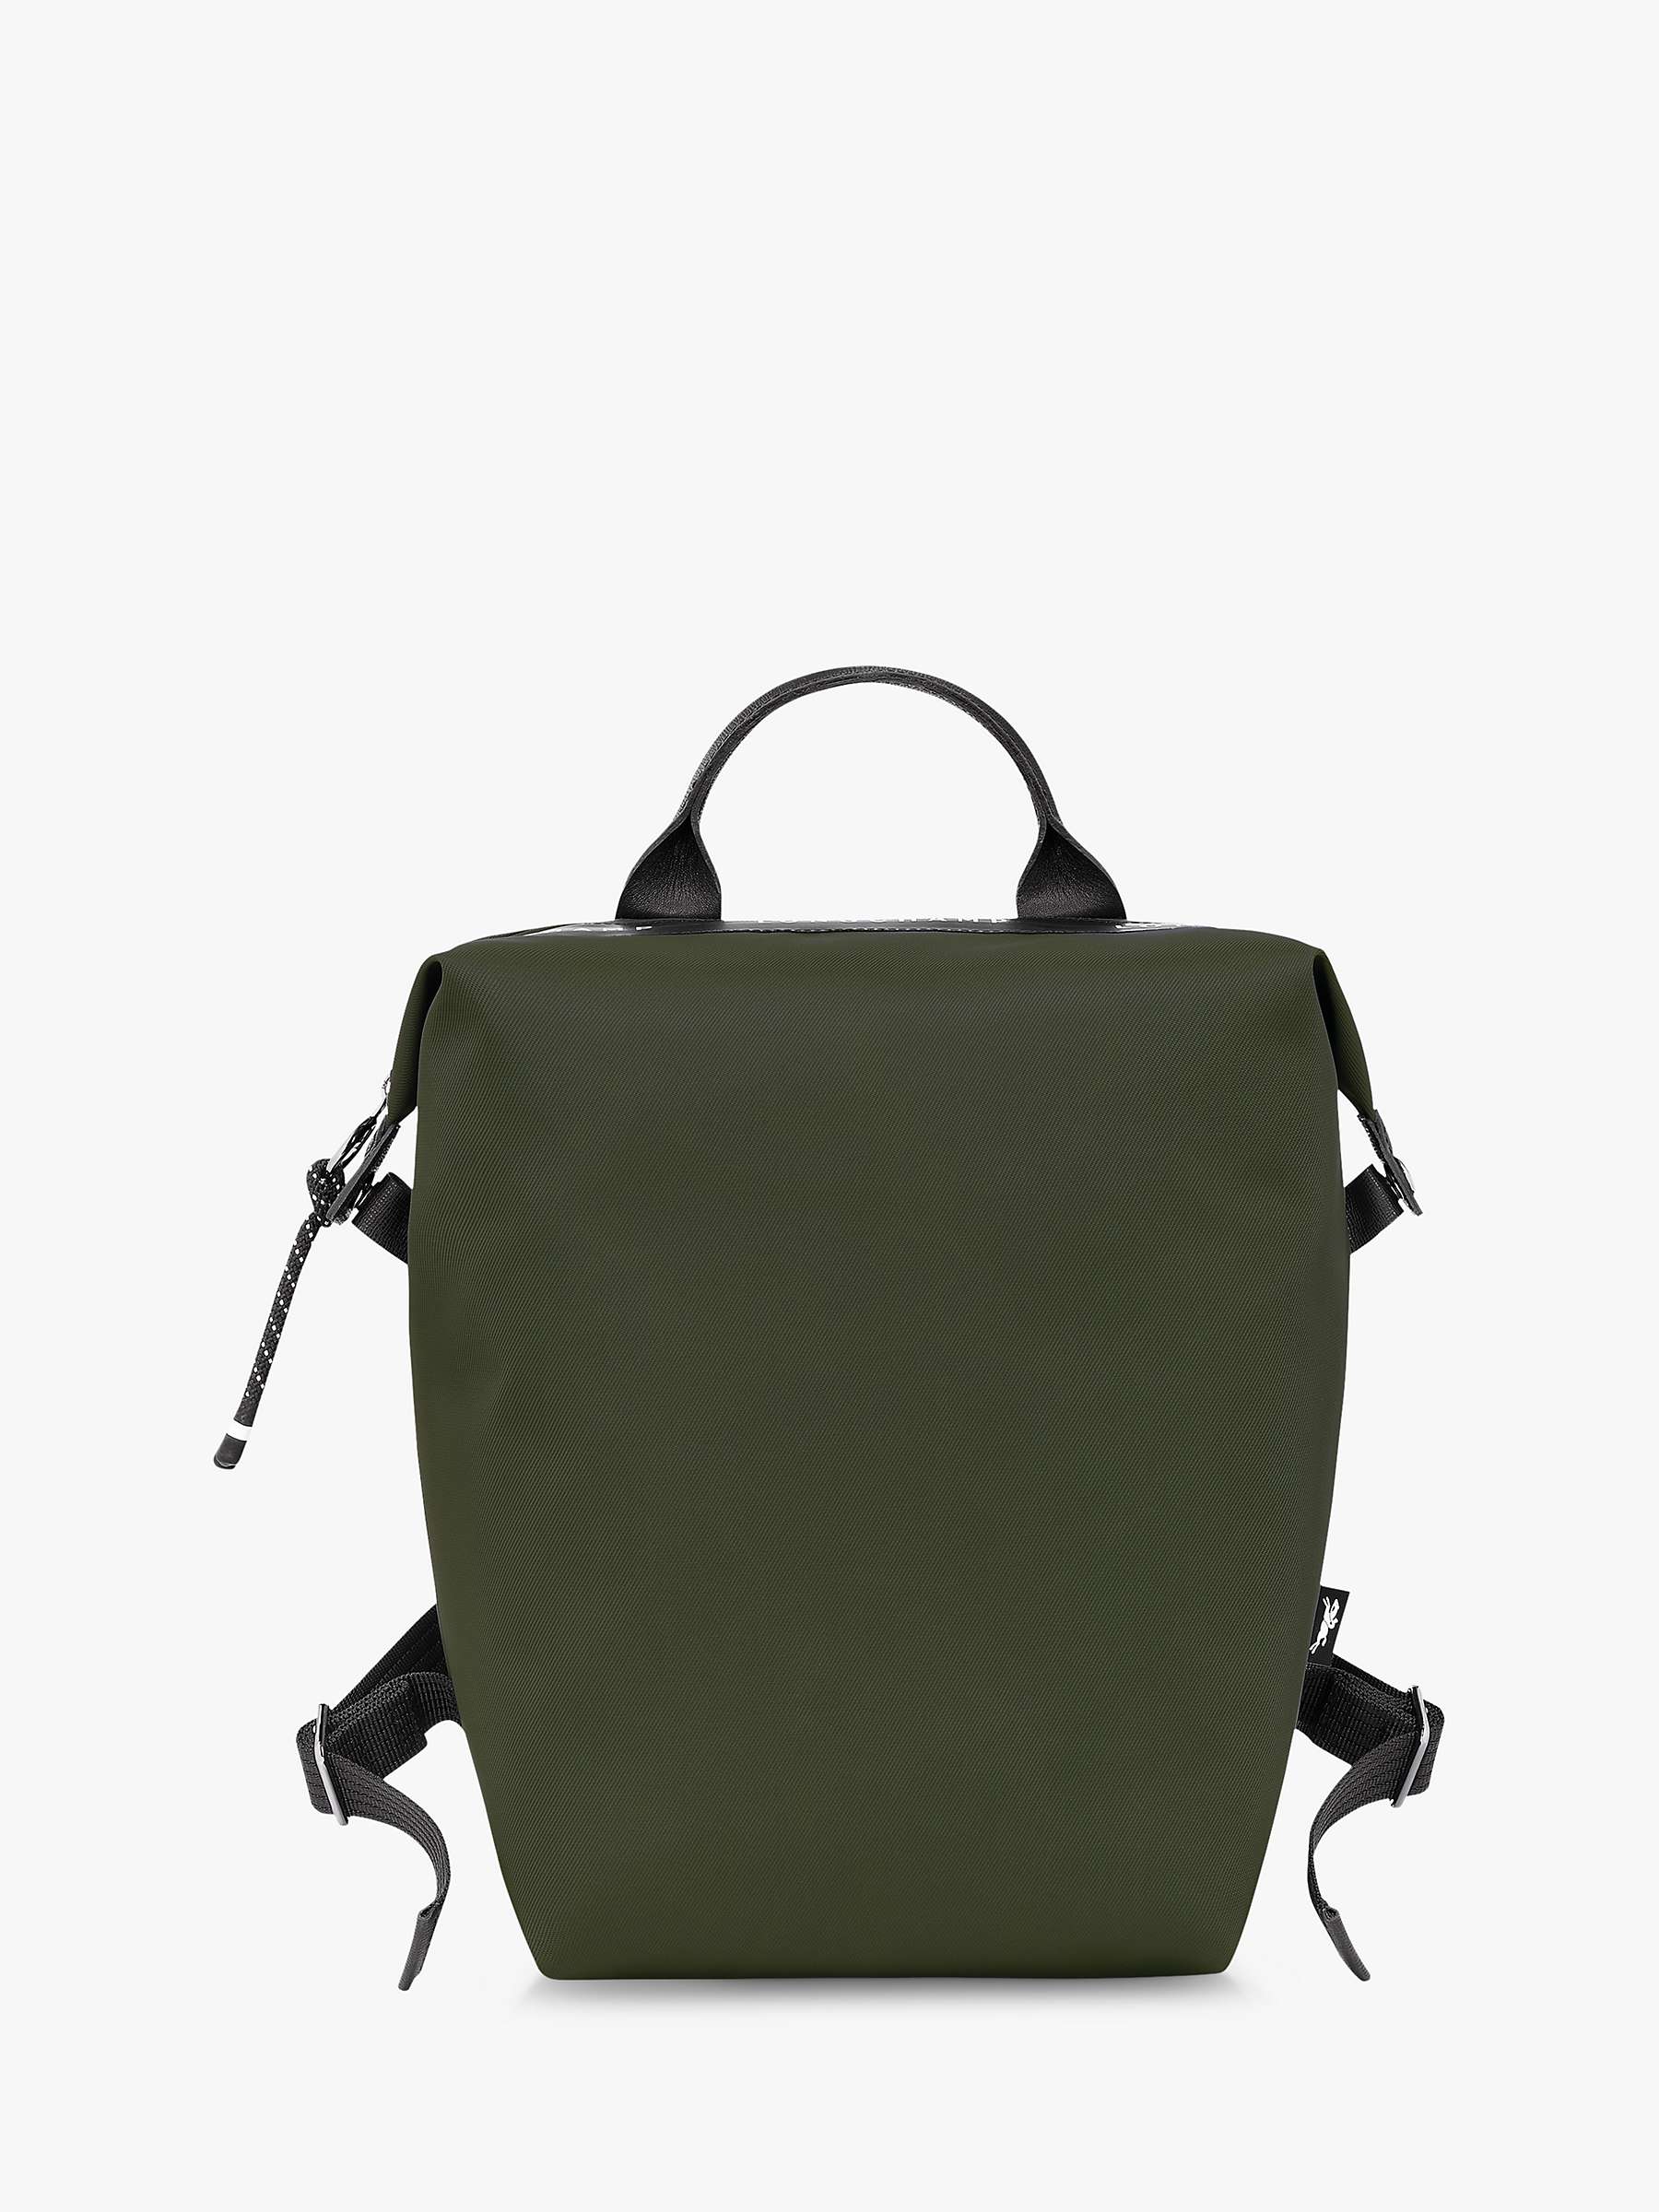 Buy Longchamp Le Pliage Energy Backpack Online at johnlewis.com